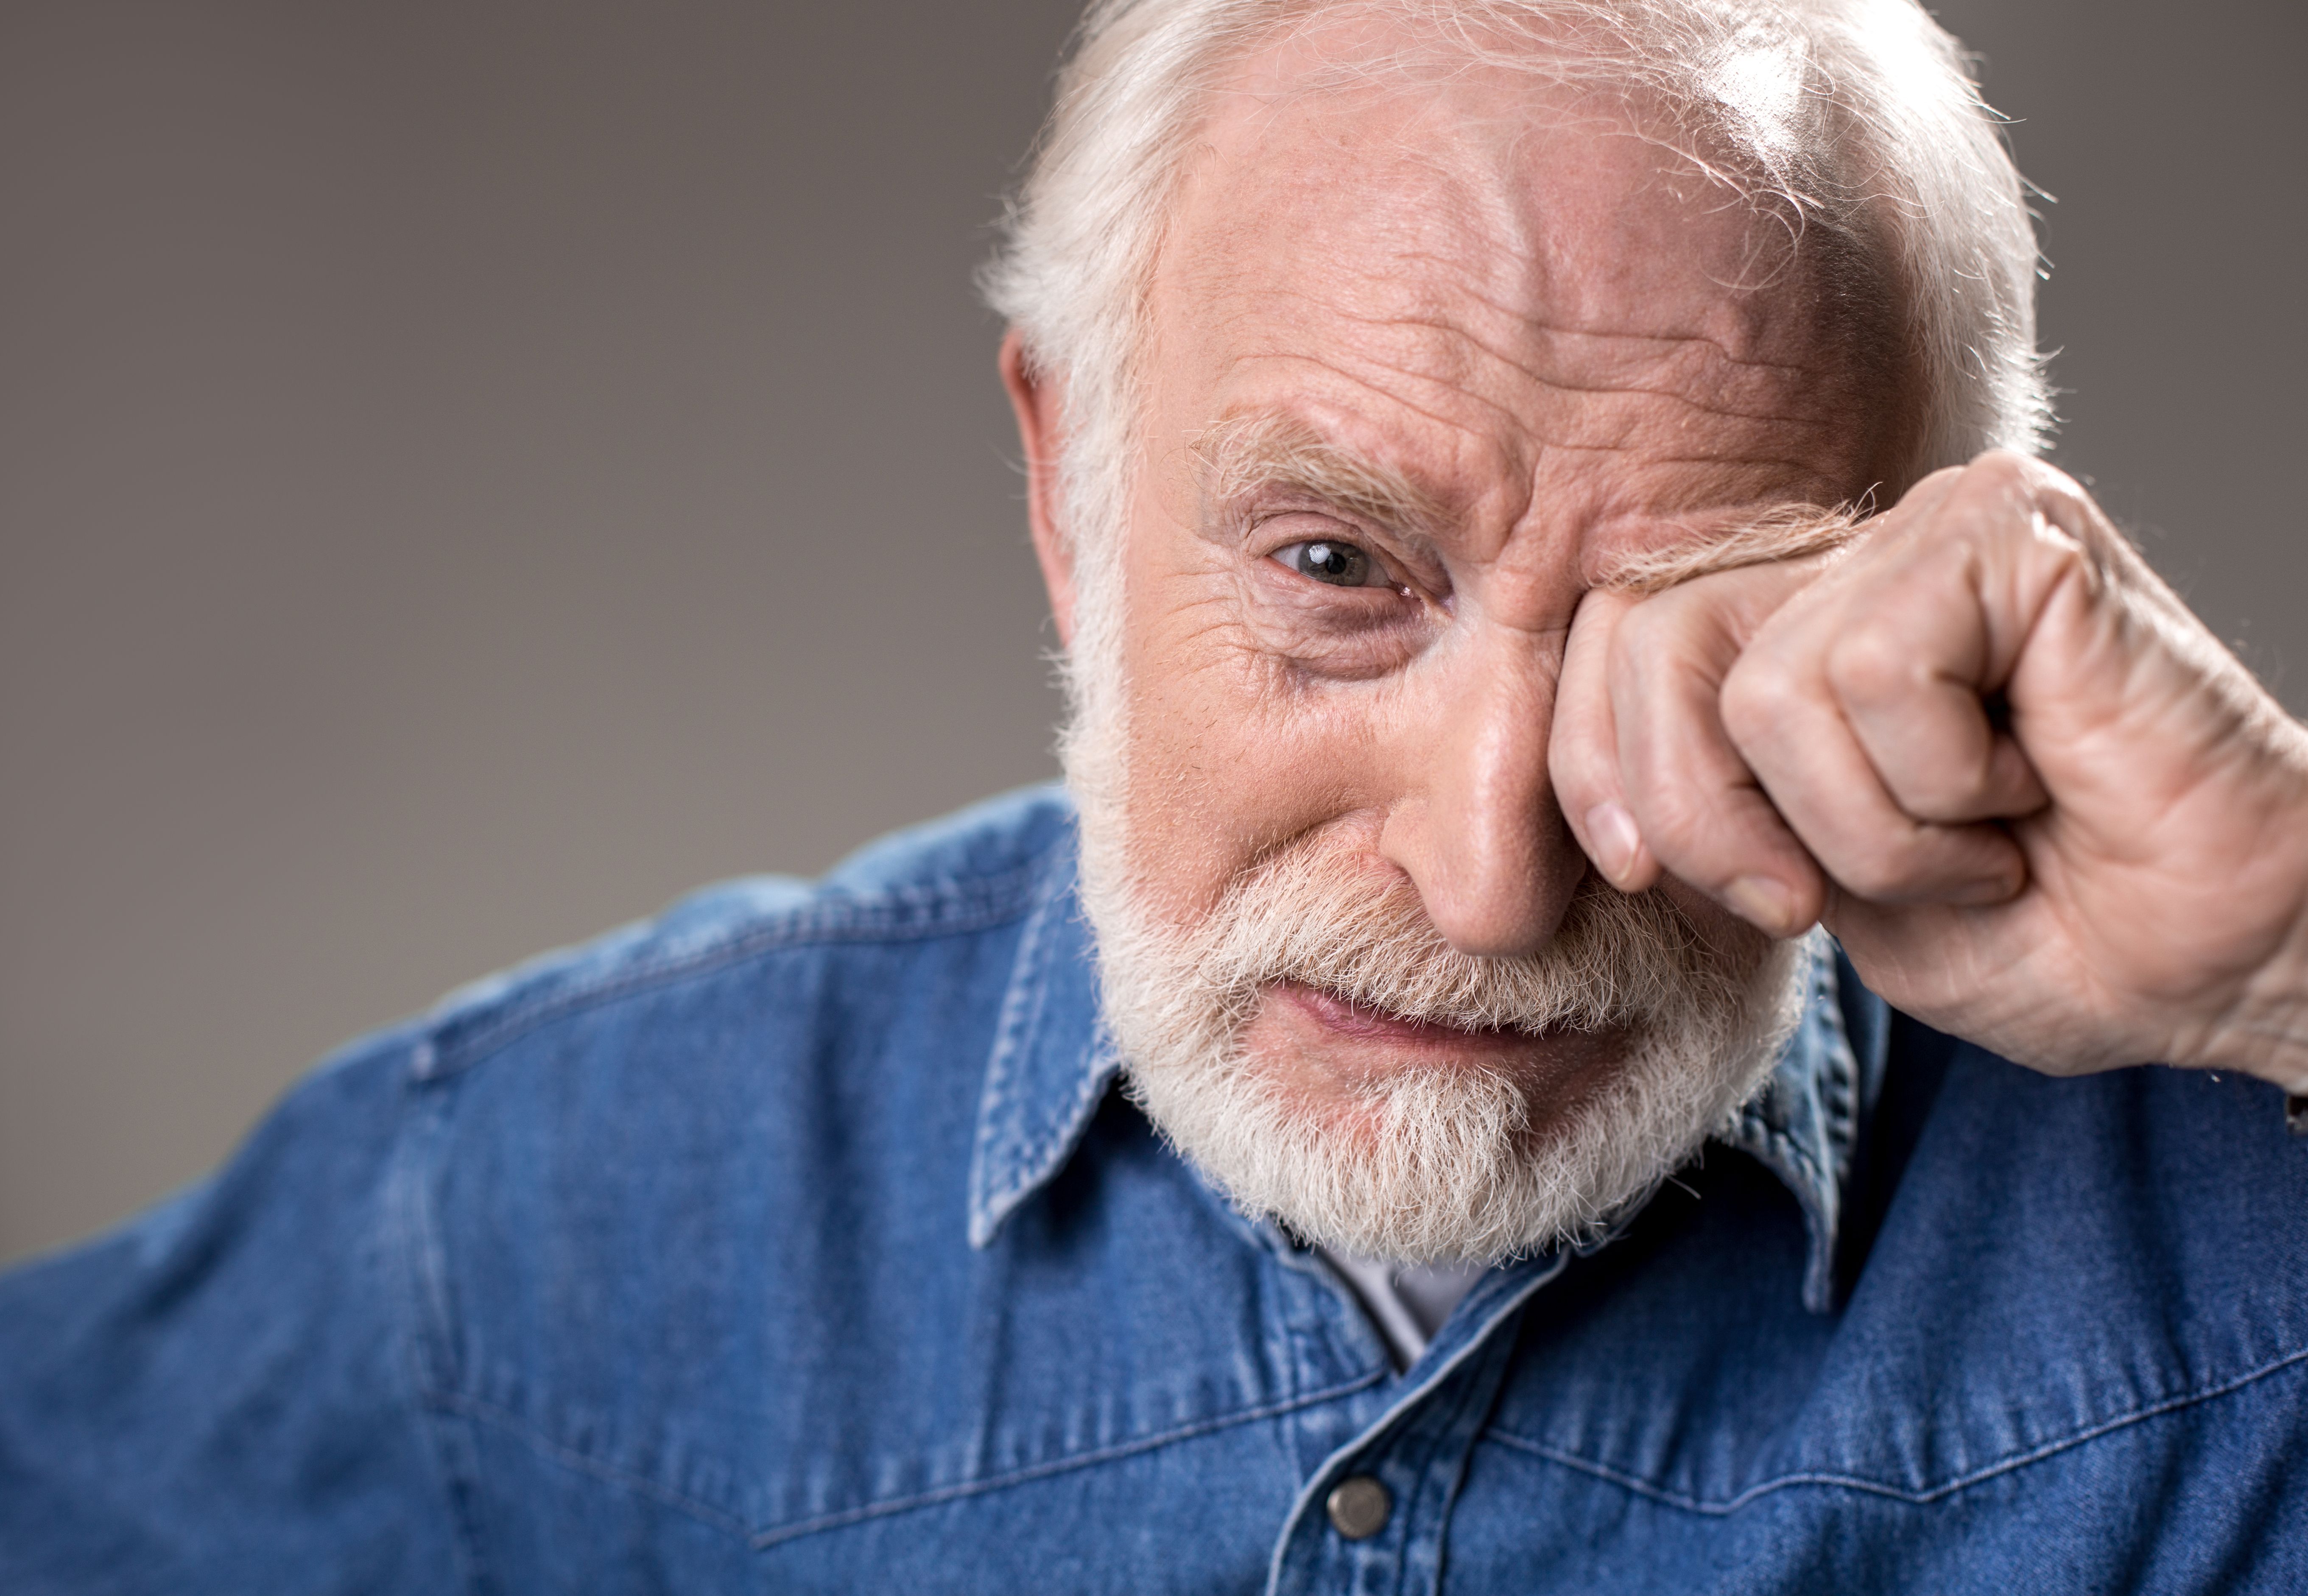 Grandfather rubbing his eye. | Photo: Shutterstock